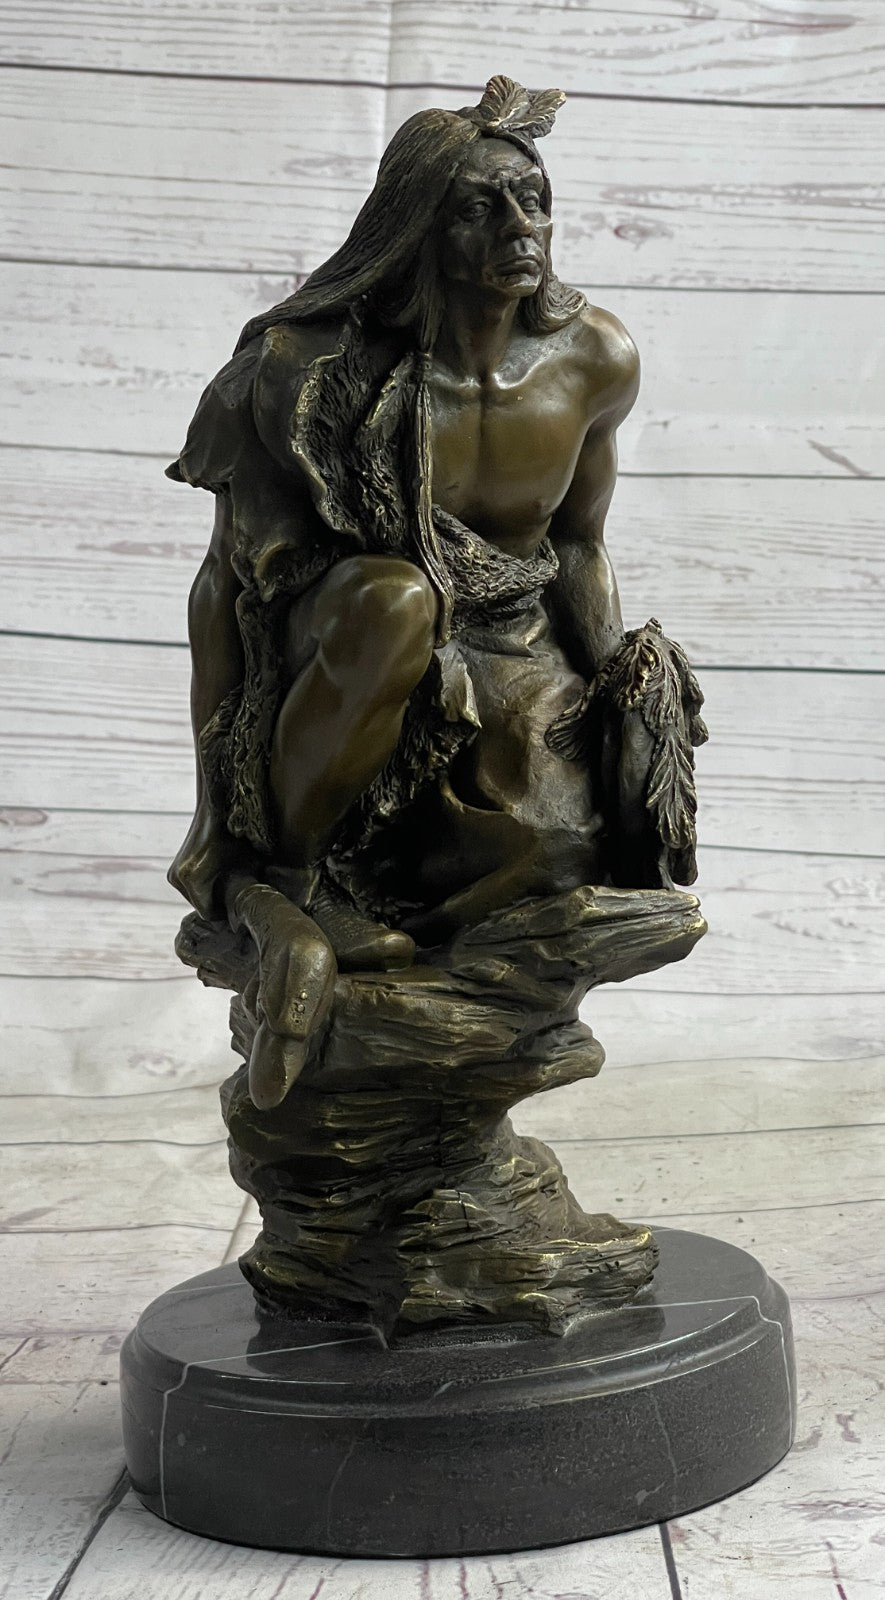 Signed American Indian Warrior Bronze Sculpture Art Figurine Statue Figure Deco